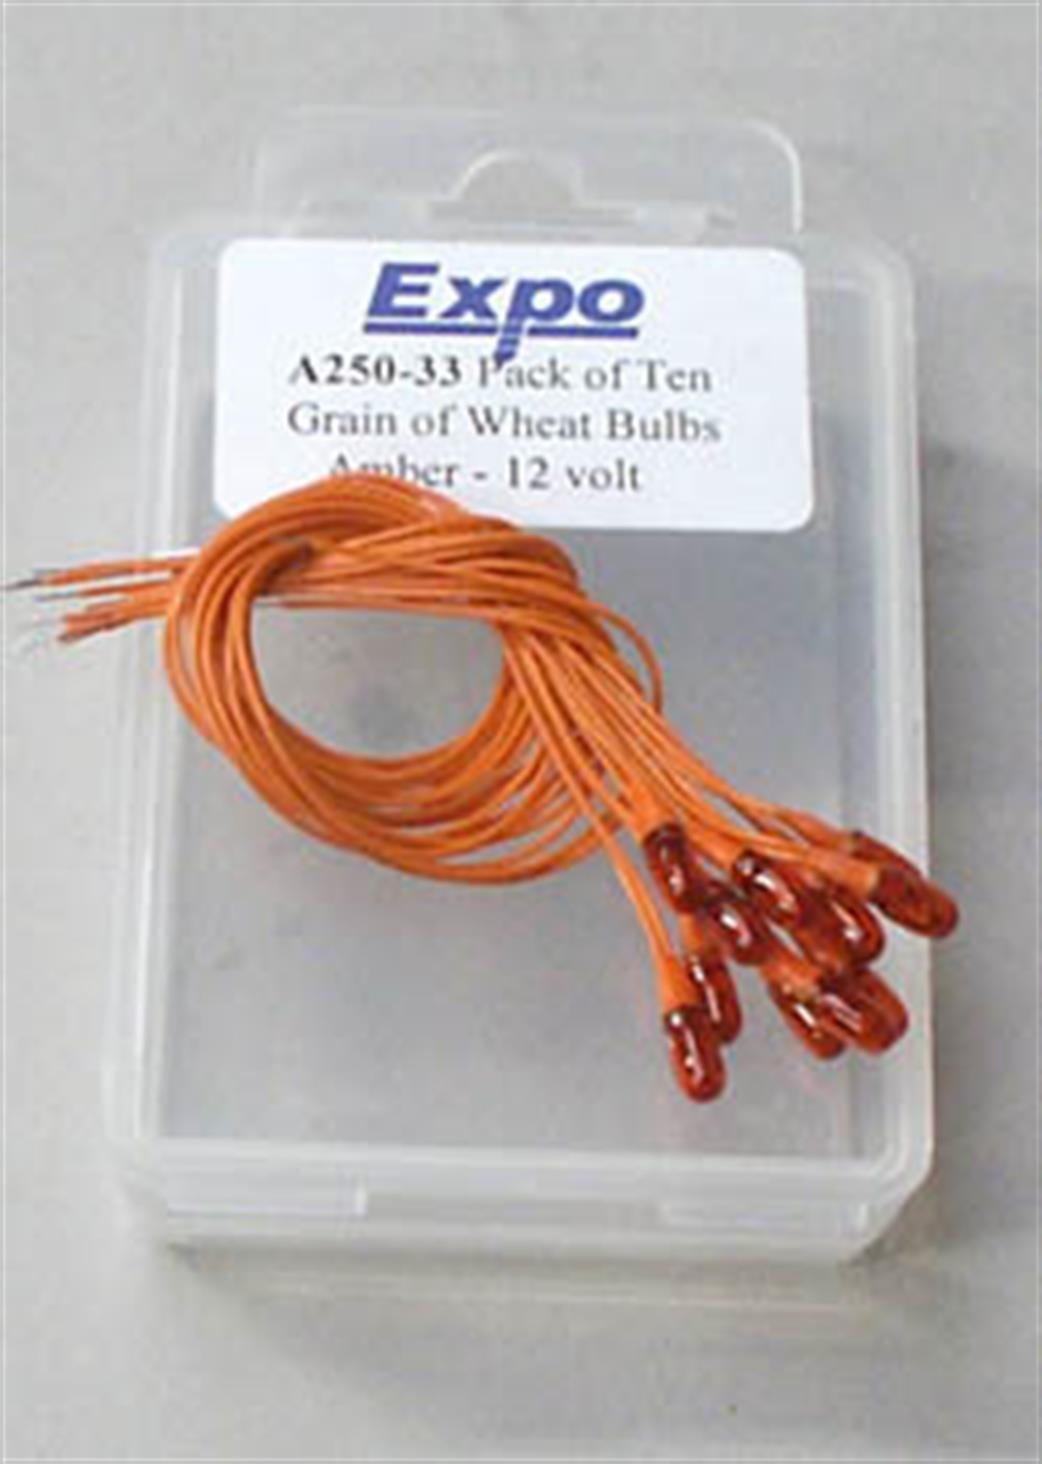 Expo  25033 Amber Grain of Wheat Bulbs 12v Pack of 10